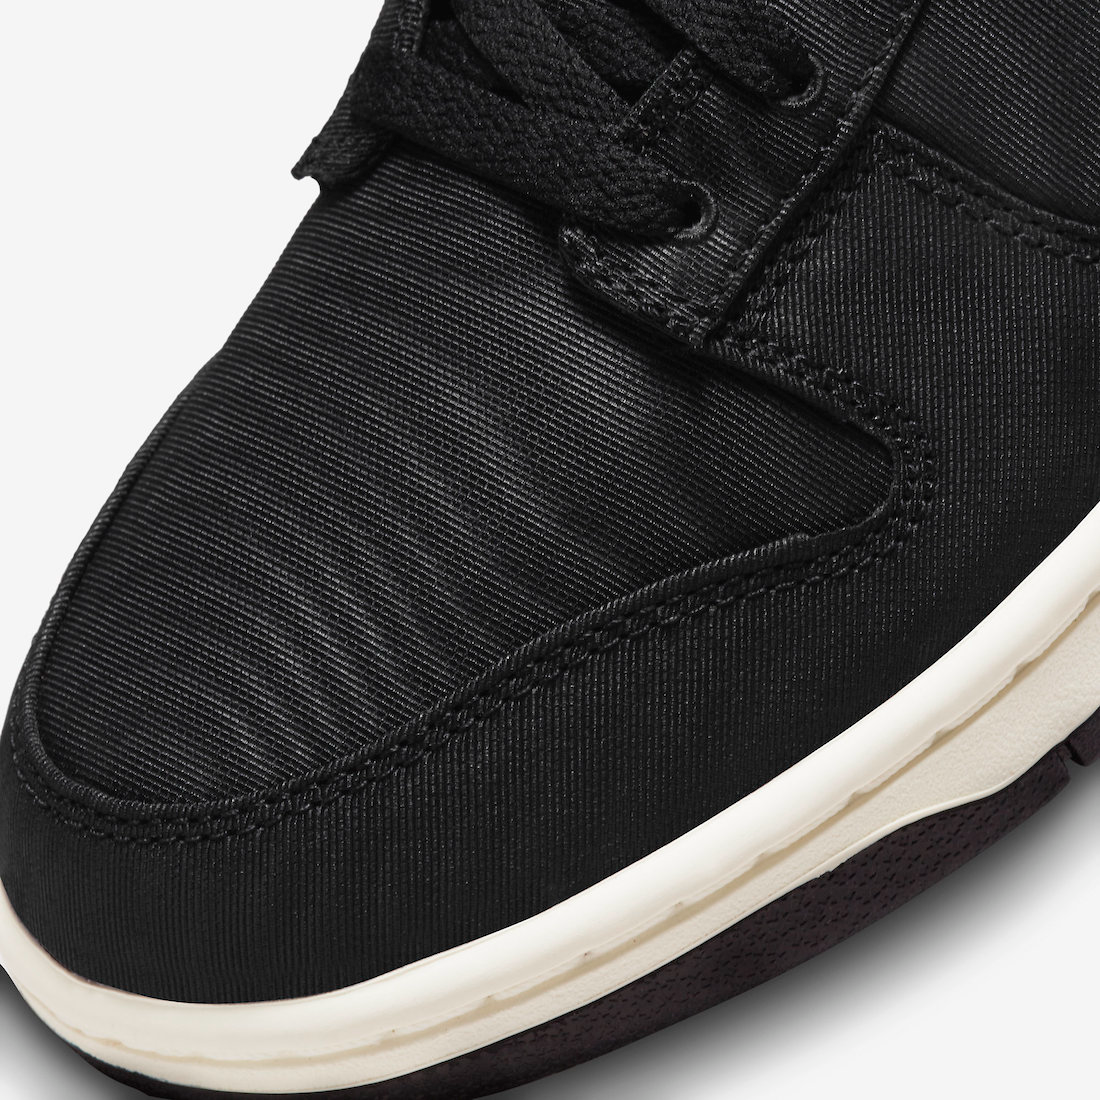 Nike Men's Dunk Premium Low Retro Shoes - Black / Sail White Sportive